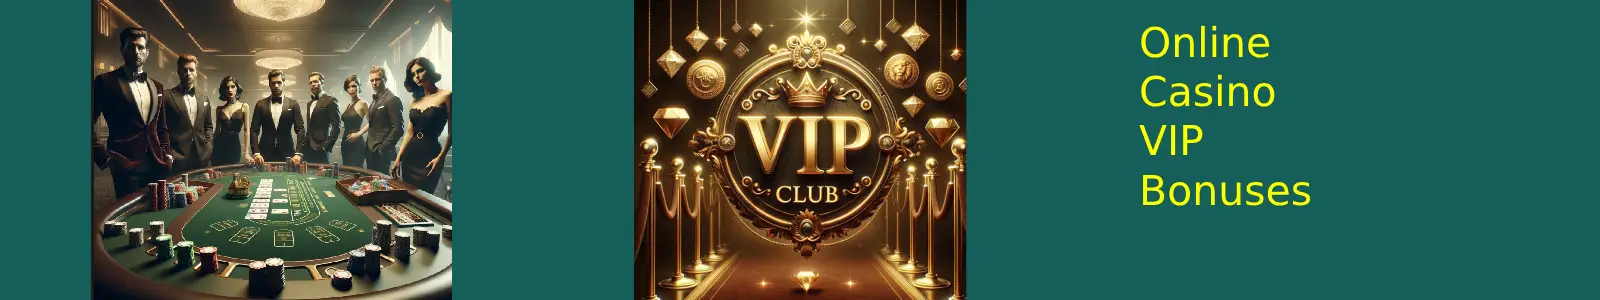 Online Casino VIP Bonuses